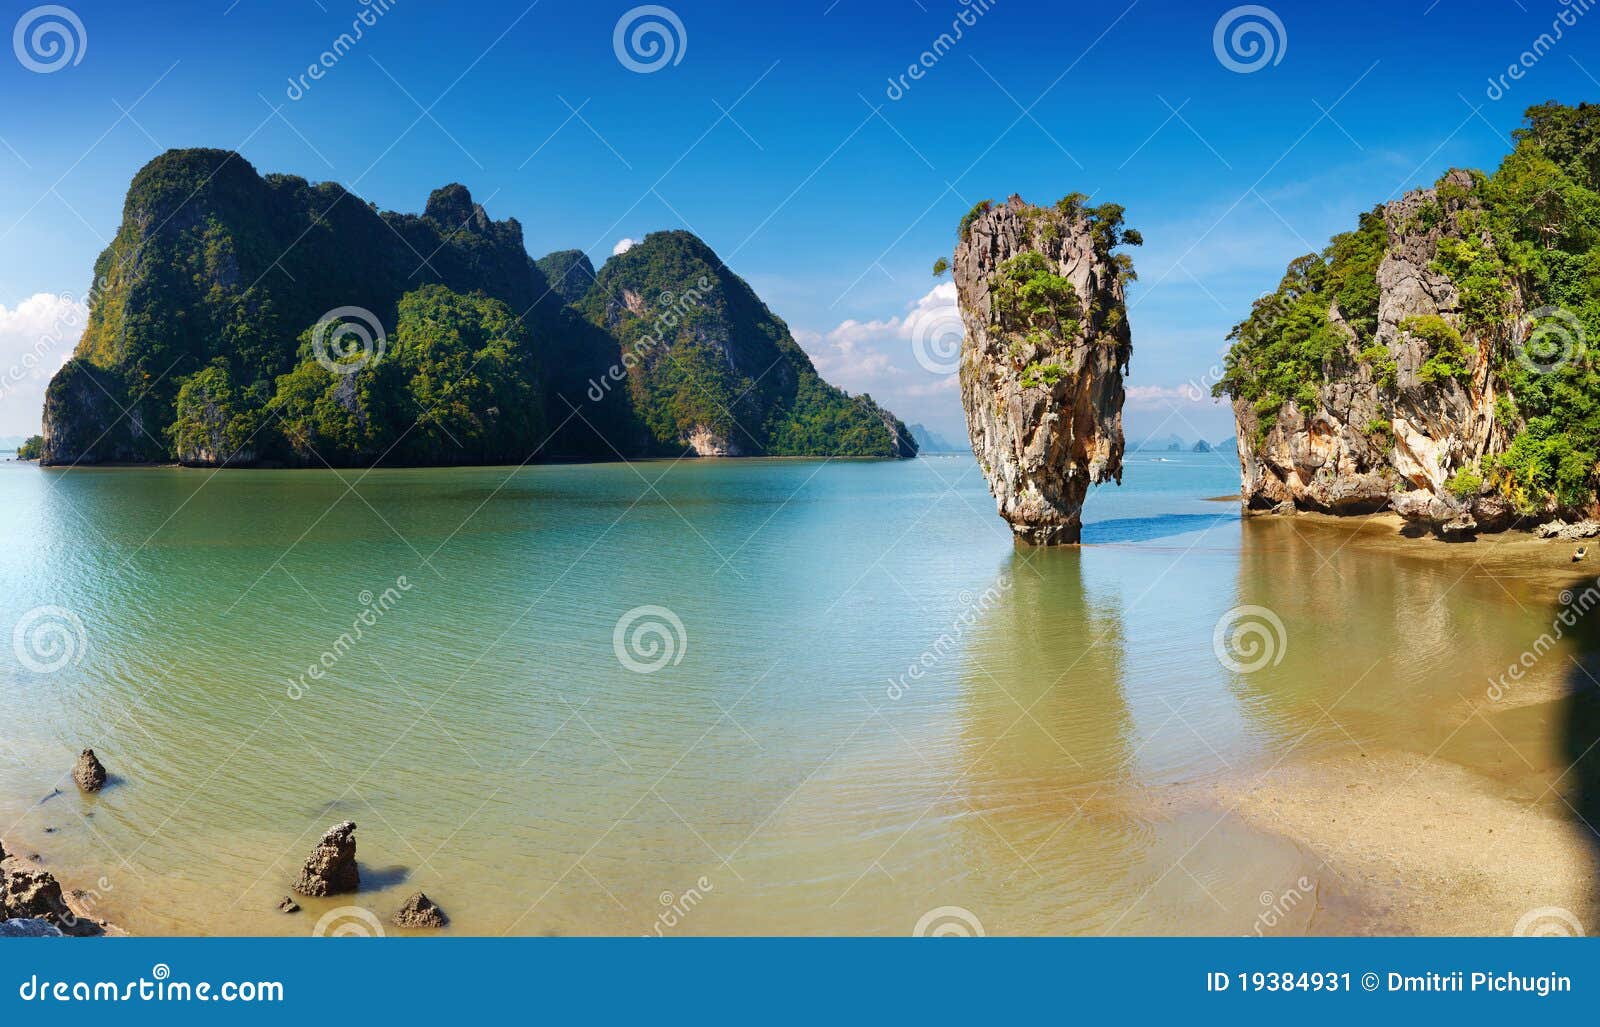 Phang Nga Bay, Thailand stock image. Image of blue, exotic - 19384931